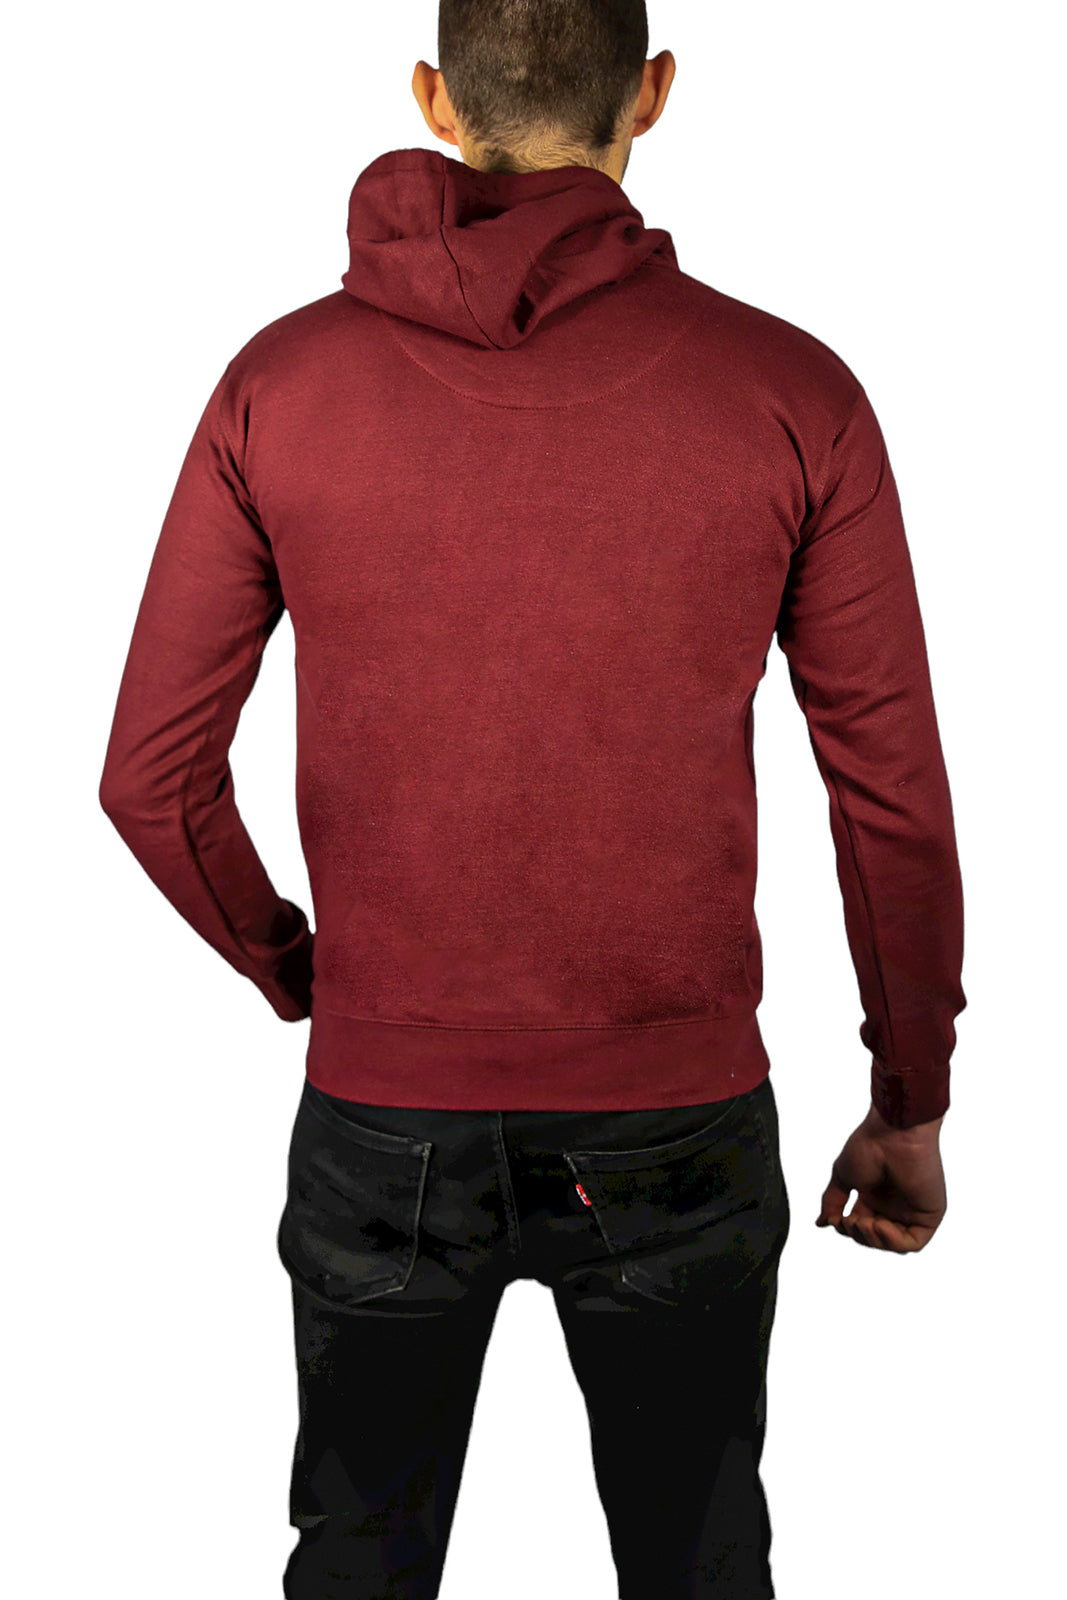 Adult Mens 100% Cotton Fleece Hoodie Jumper Pullover Sweater Warm Sweatshirt - Maroon/Burgundy - S